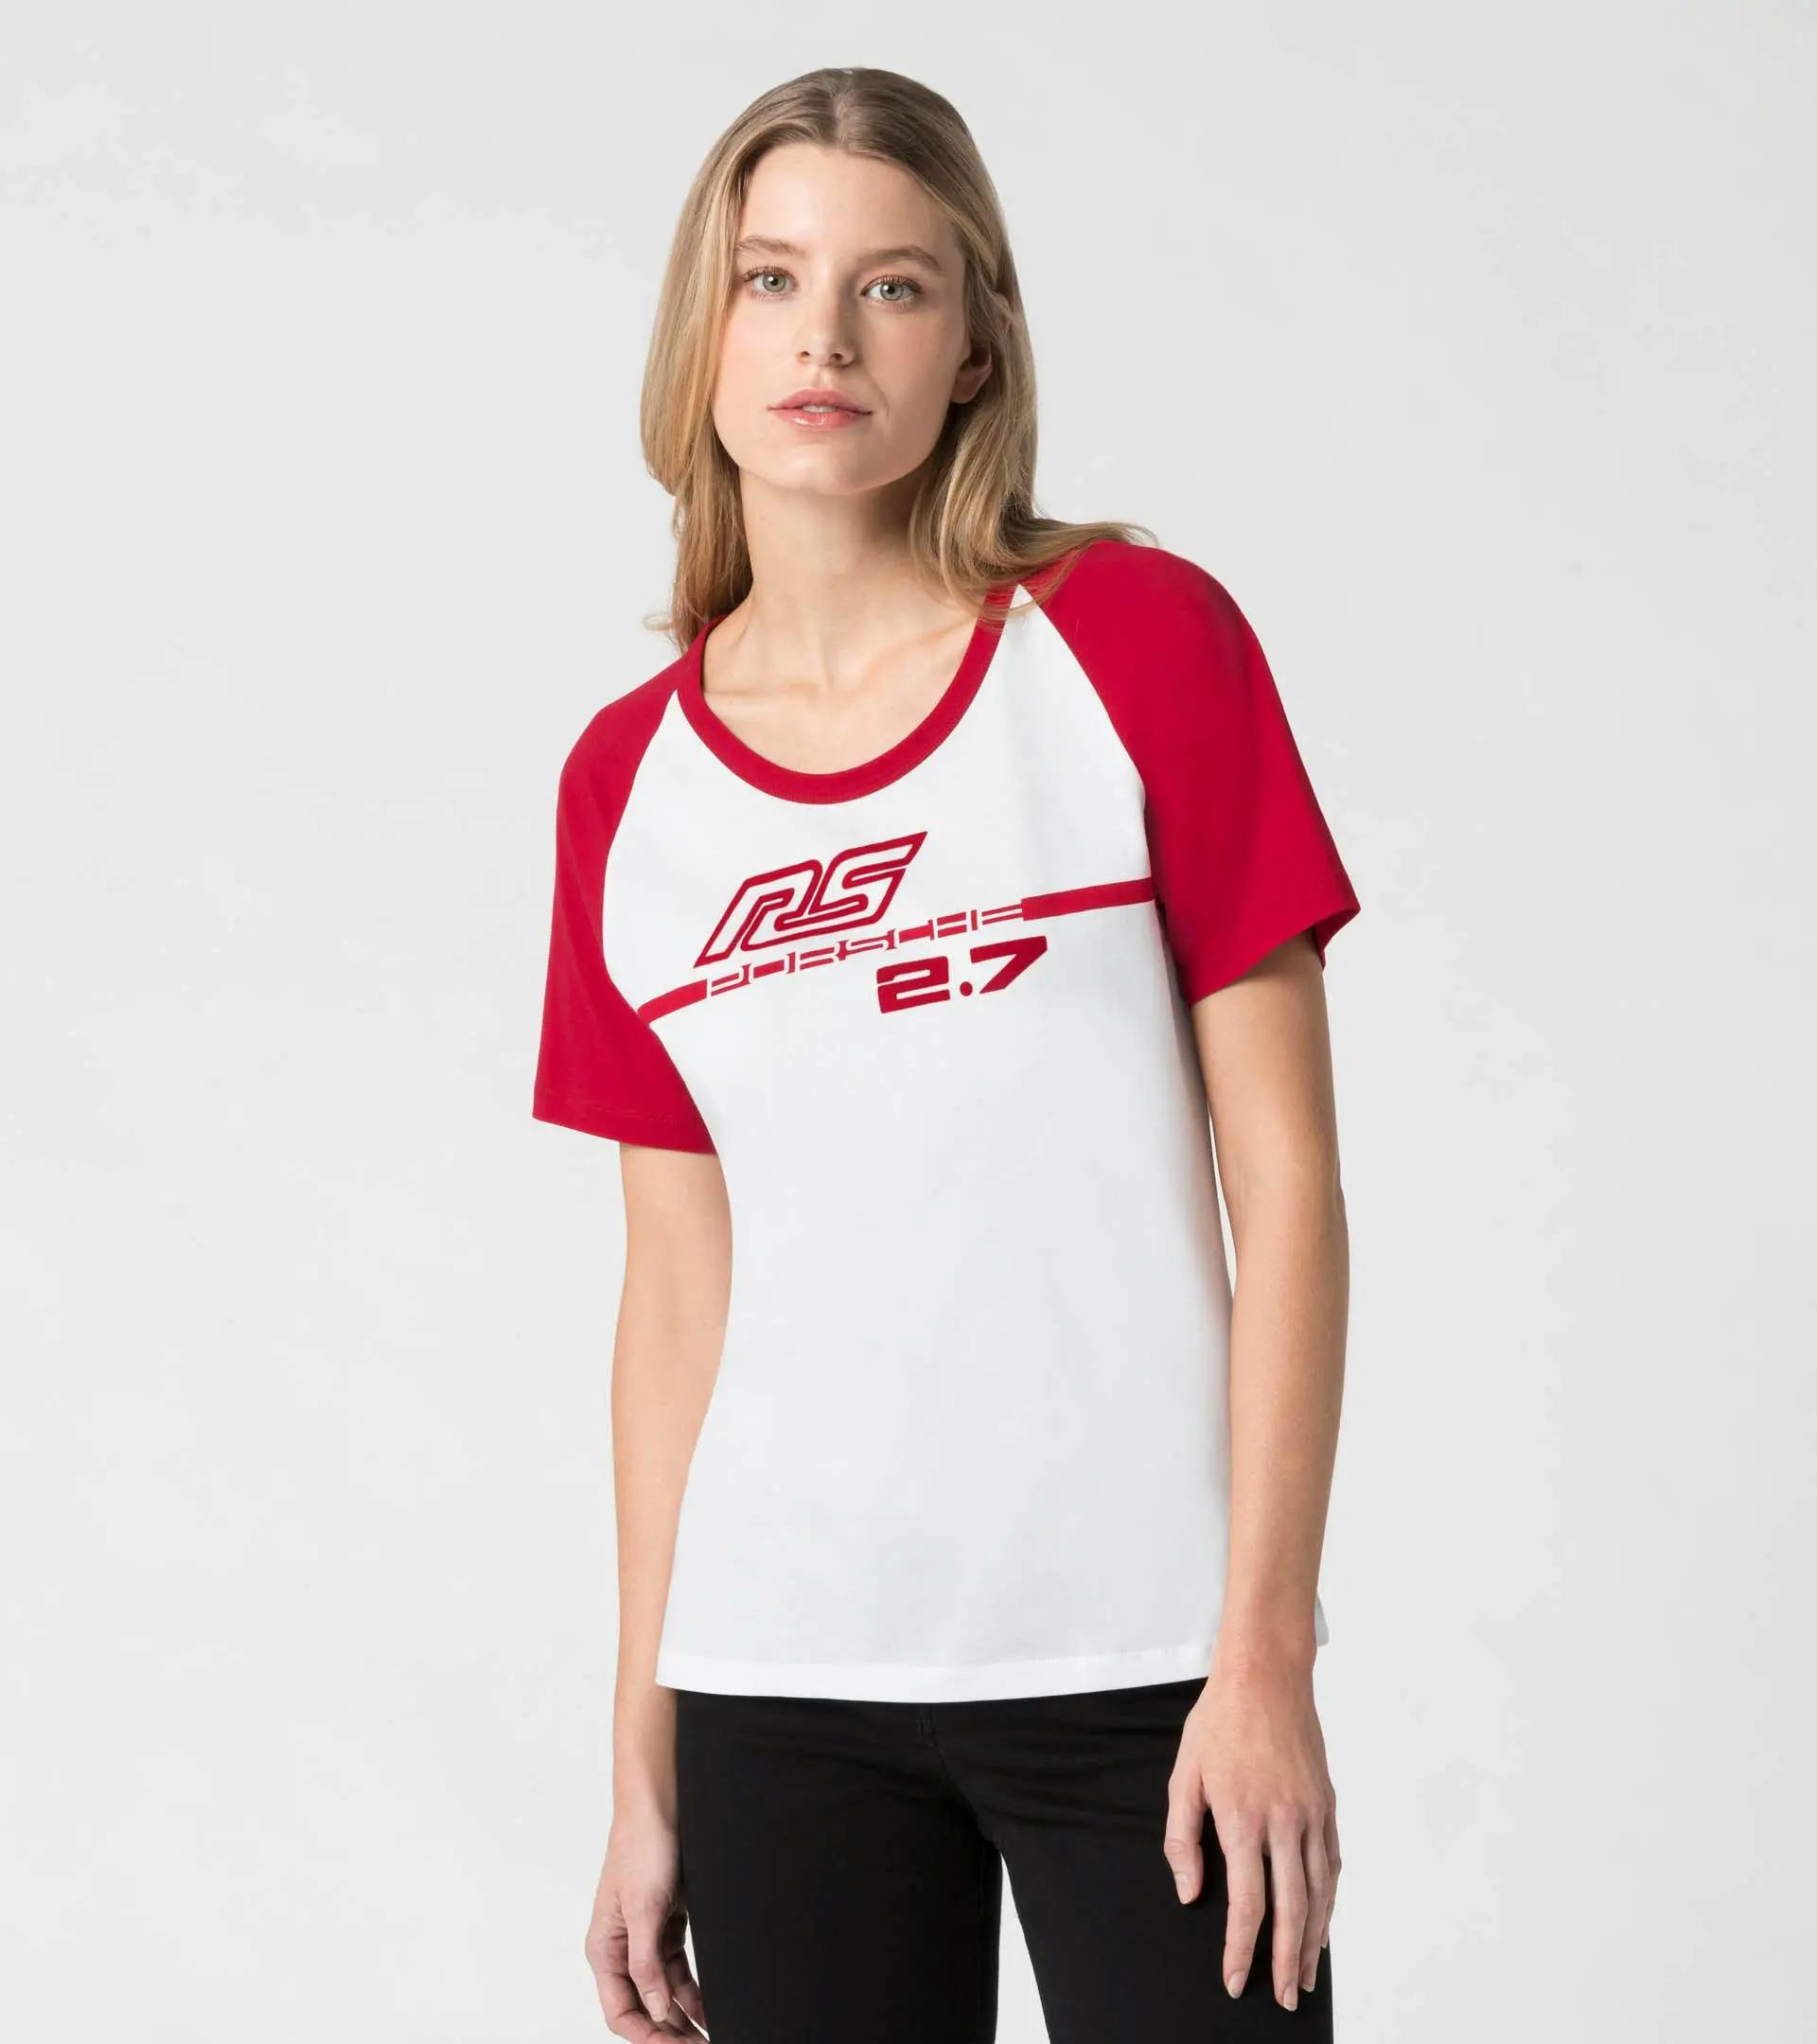 Ladies' T-shirt – RS 2.7 5